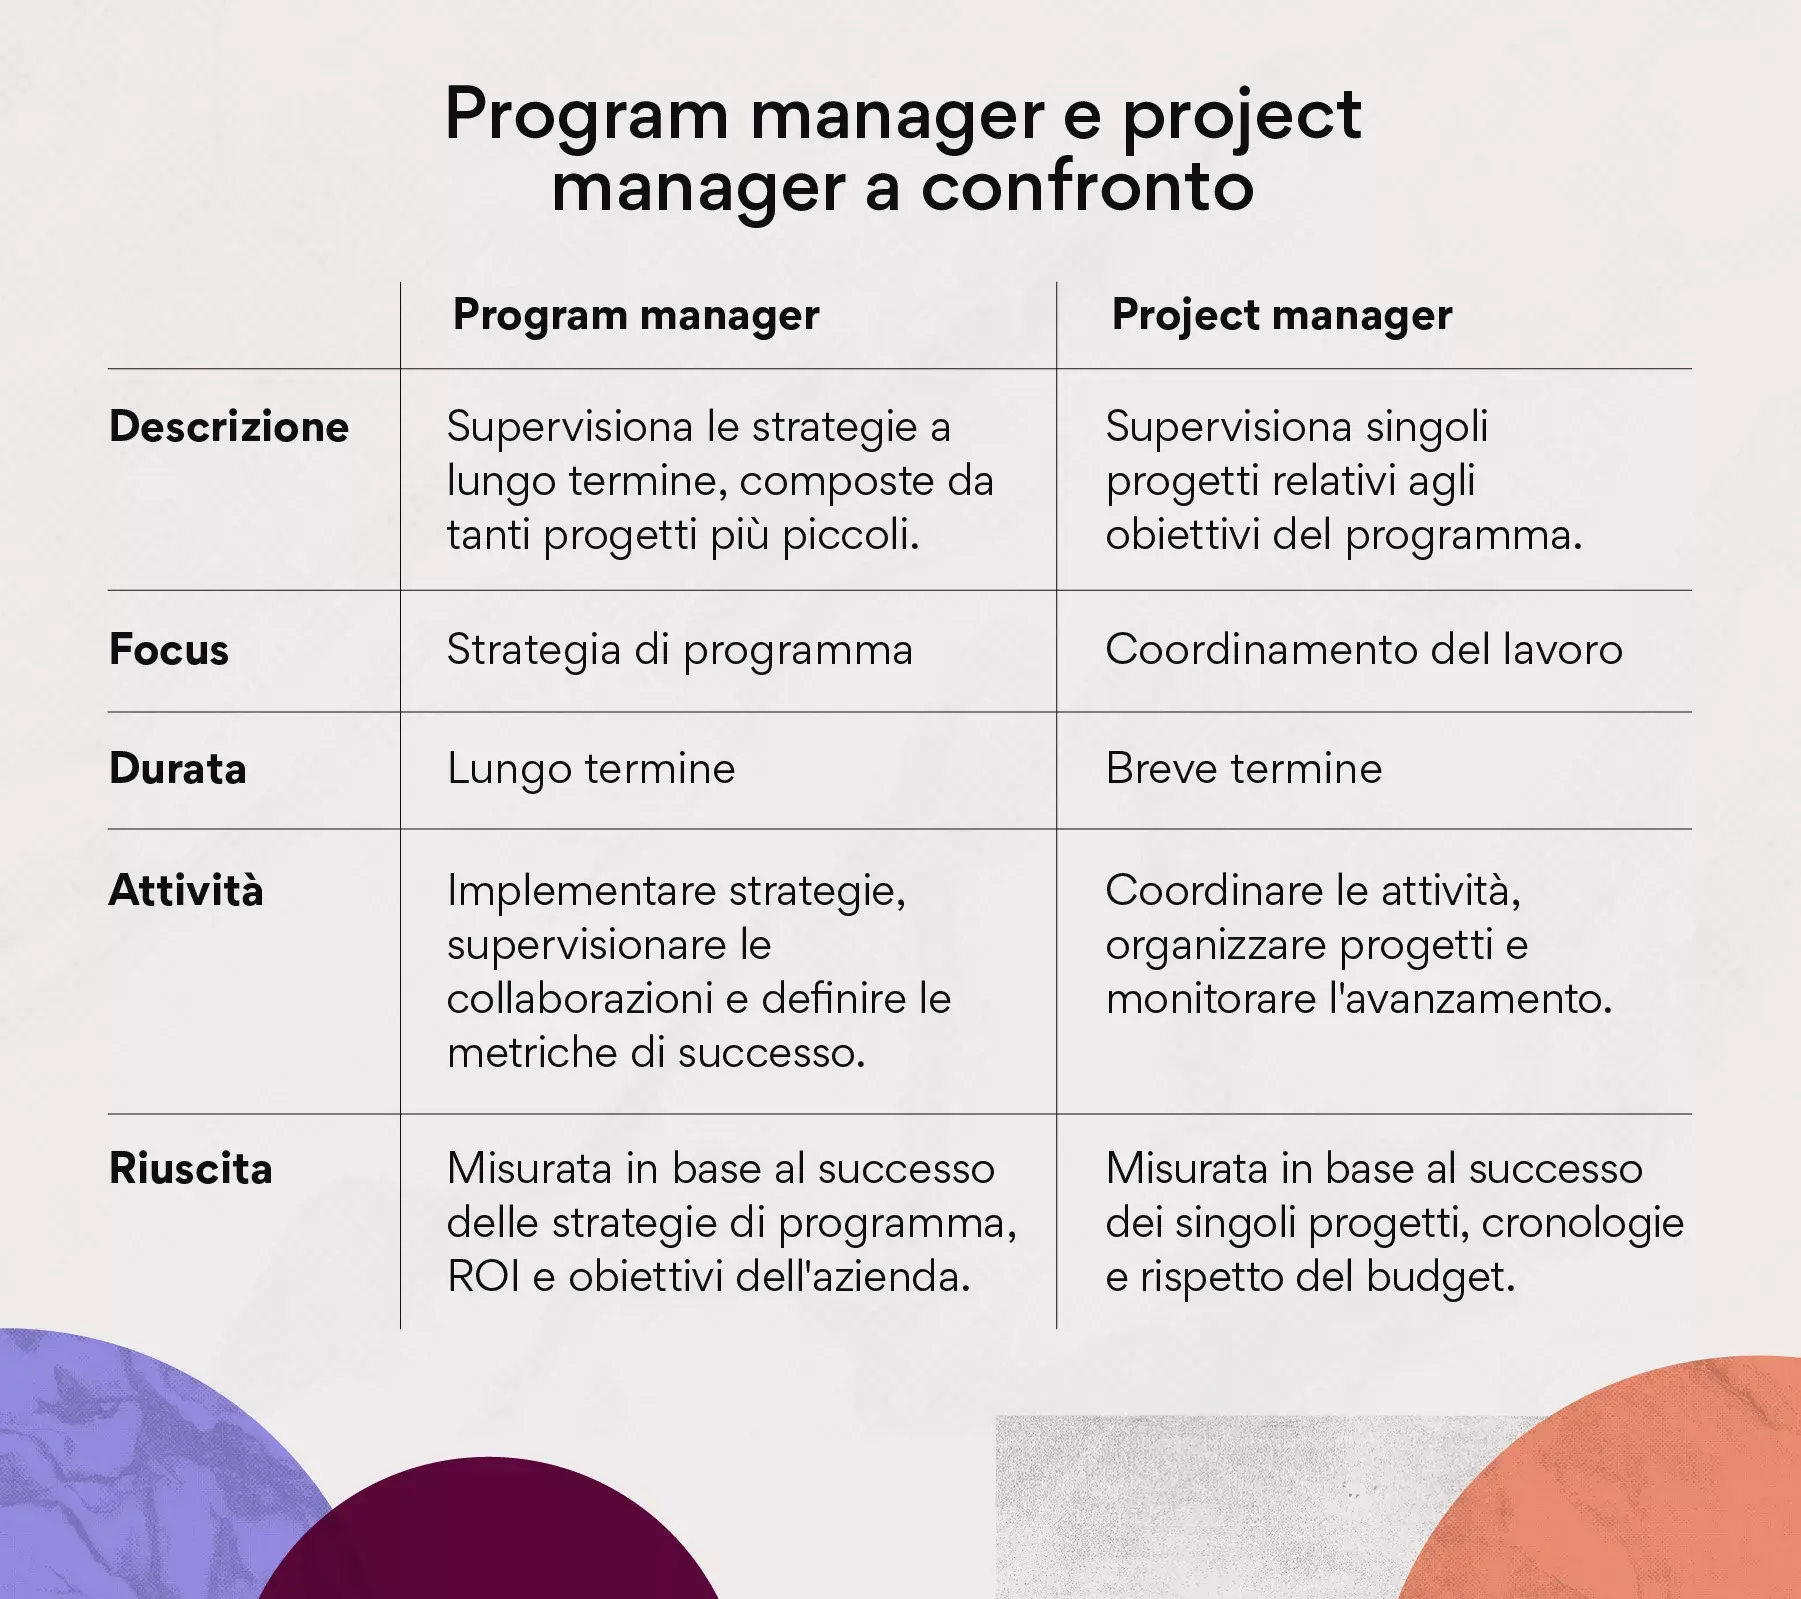 Program manager e project manager a confronto